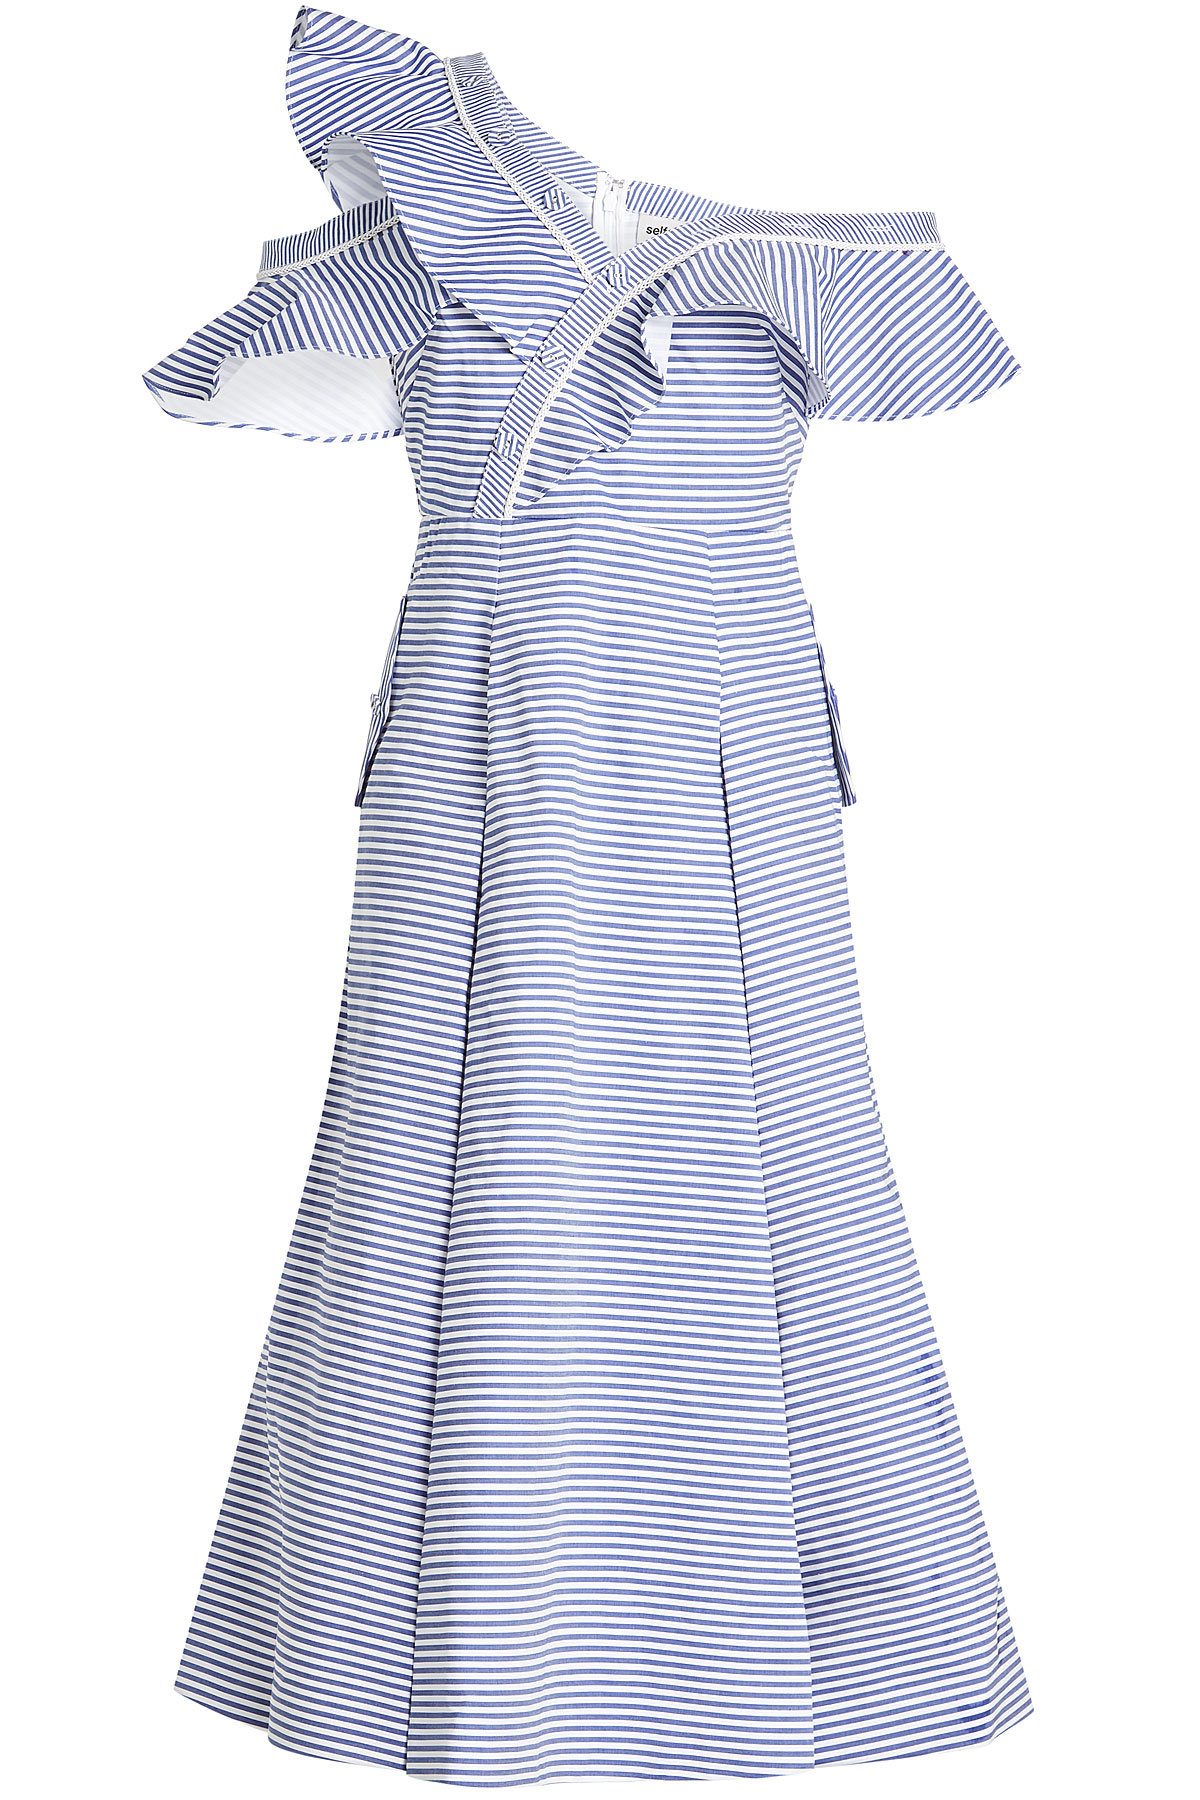 Striped Off-Shoulder Dress in Cotton by Self-Portrait